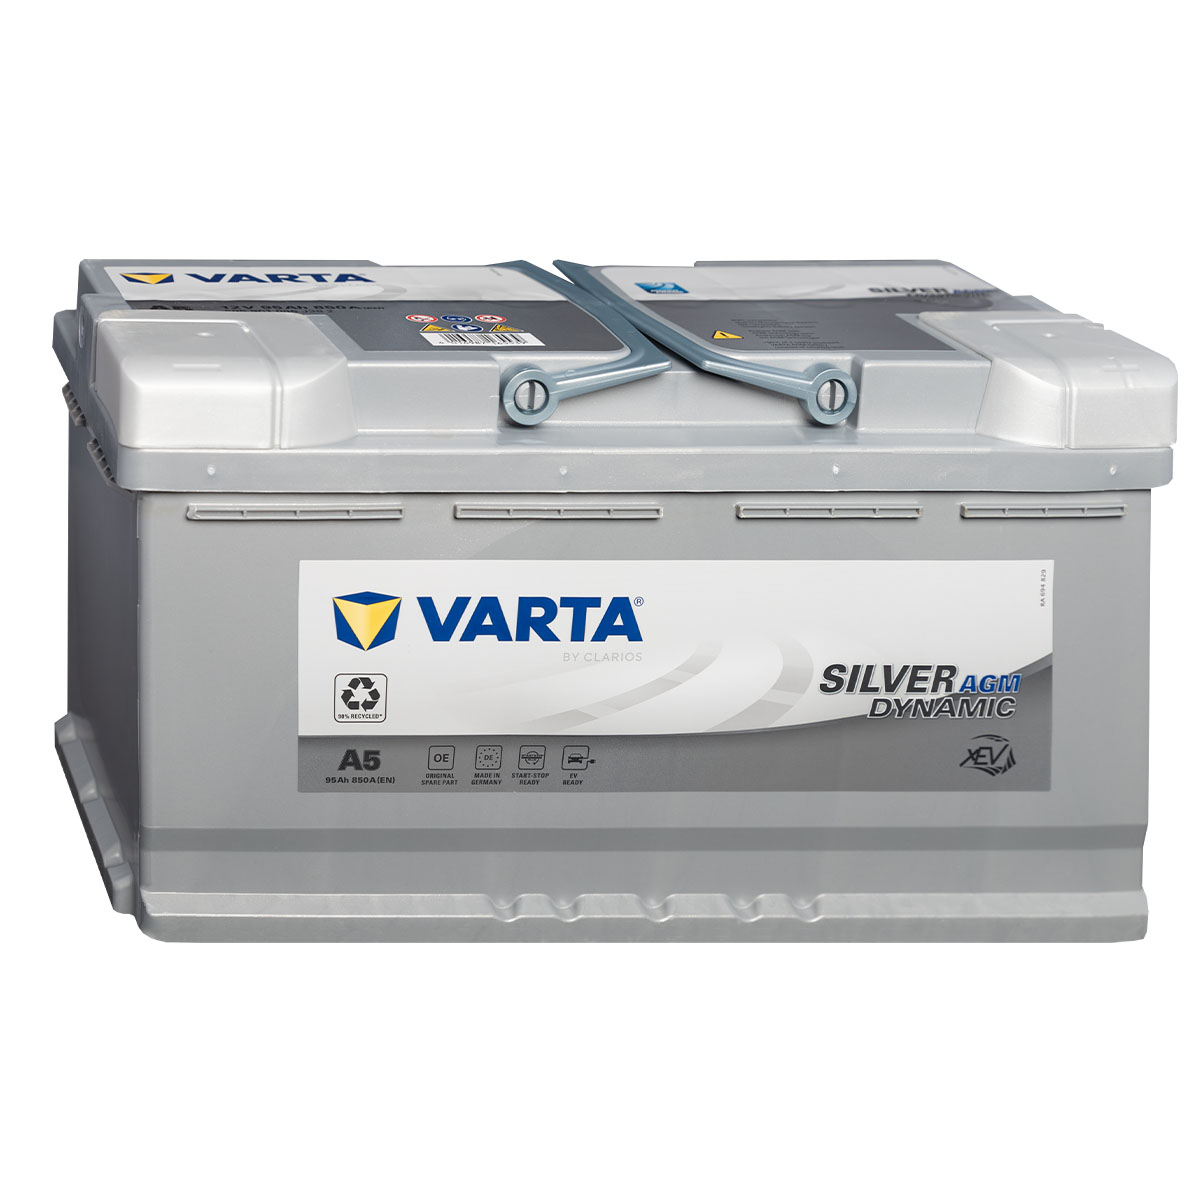 VARTA Silver Dynamic AGM Autobatterie speziell für Start-Stop-Technologie,  G14, 595 901 085, 95 Ah, 850 A - ATU